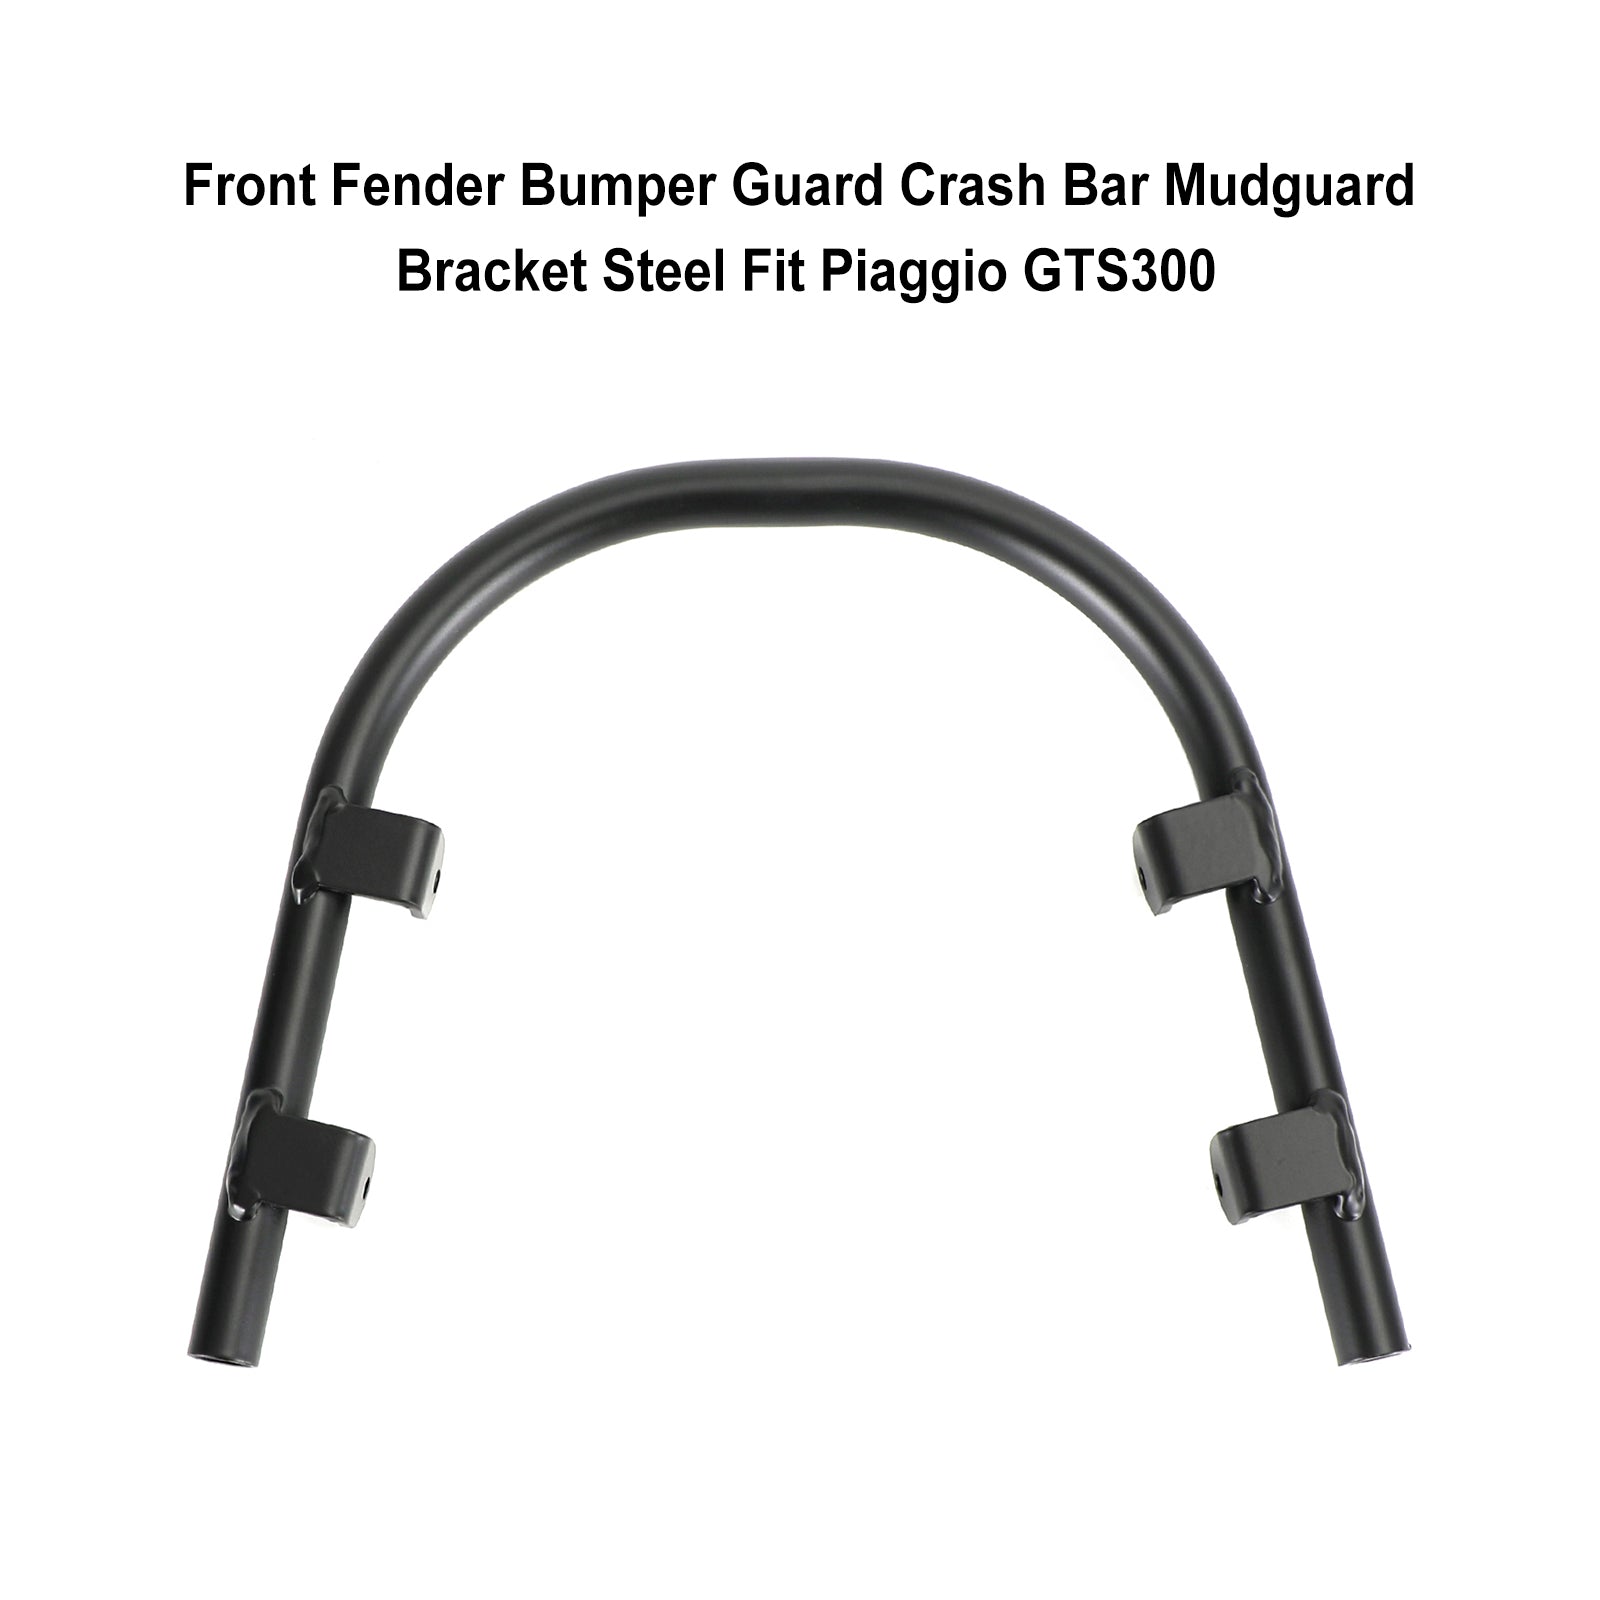 Crash Bar Front Fender Bumper Mudguard Black For Piaggio Vespa Gts 250 300 08-21 Generic